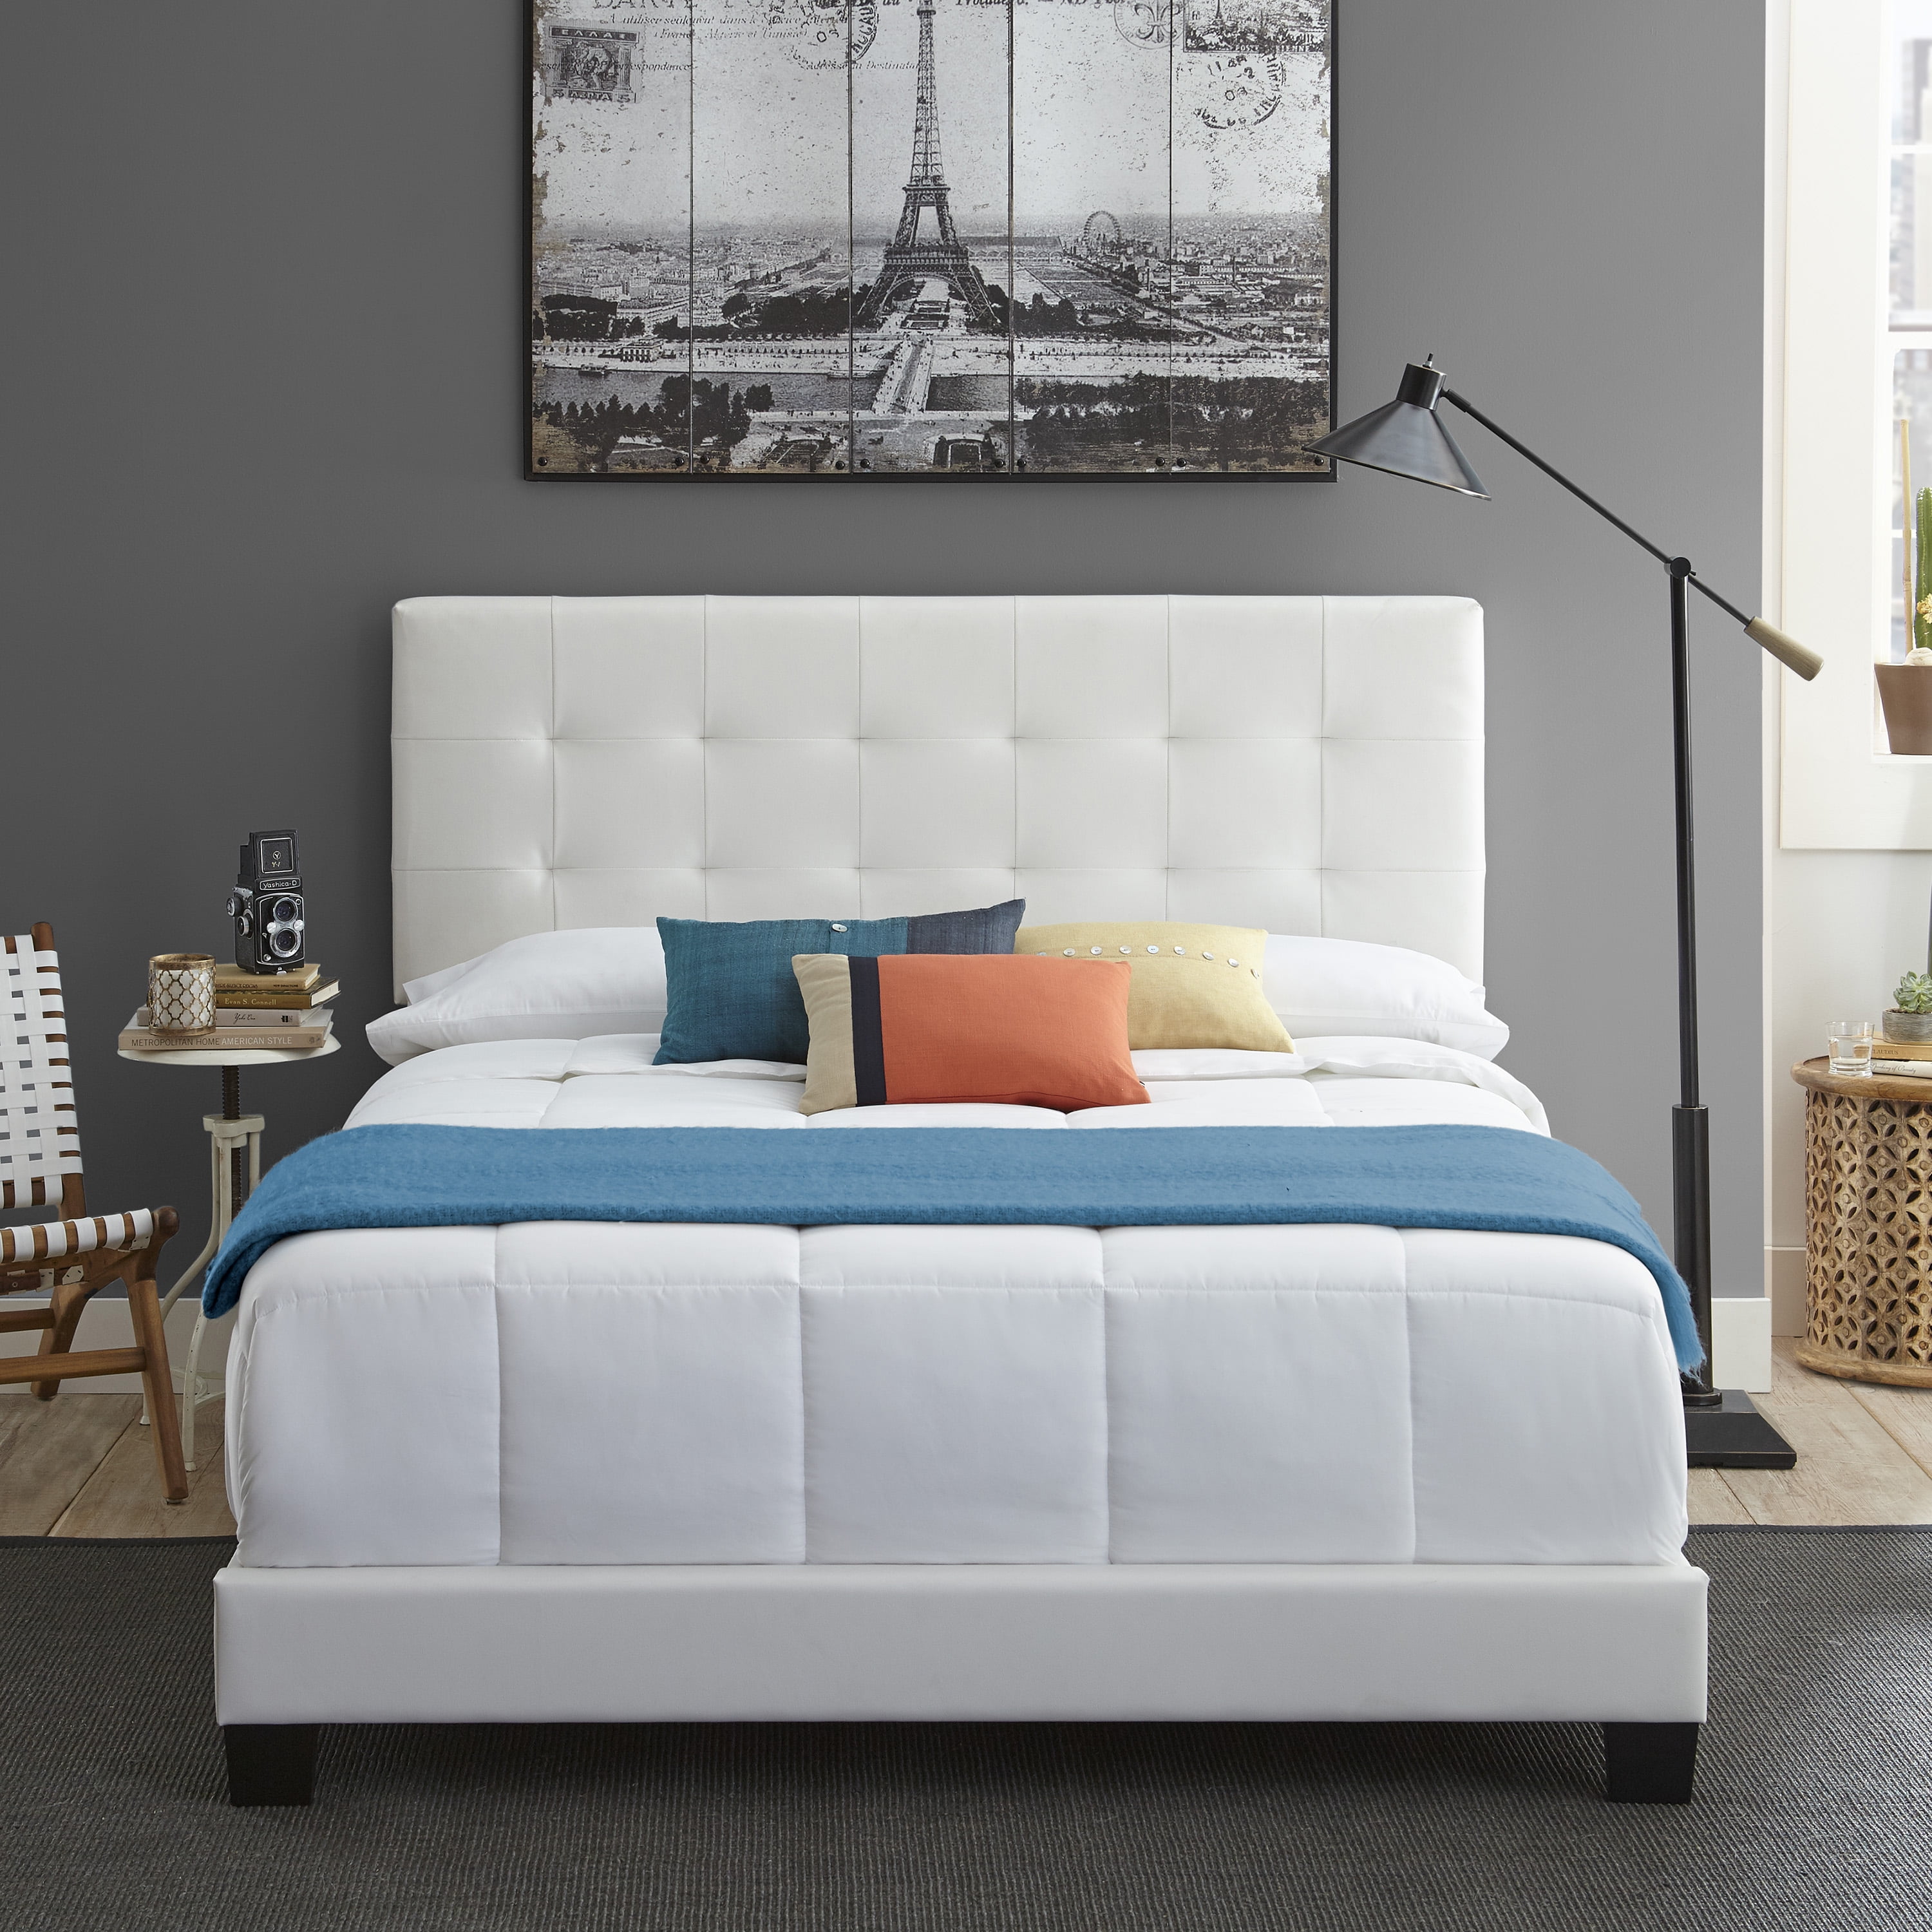 Boyd Sleep Roma Upholstered Tufted Faux Leather Platform Bed with Bonus